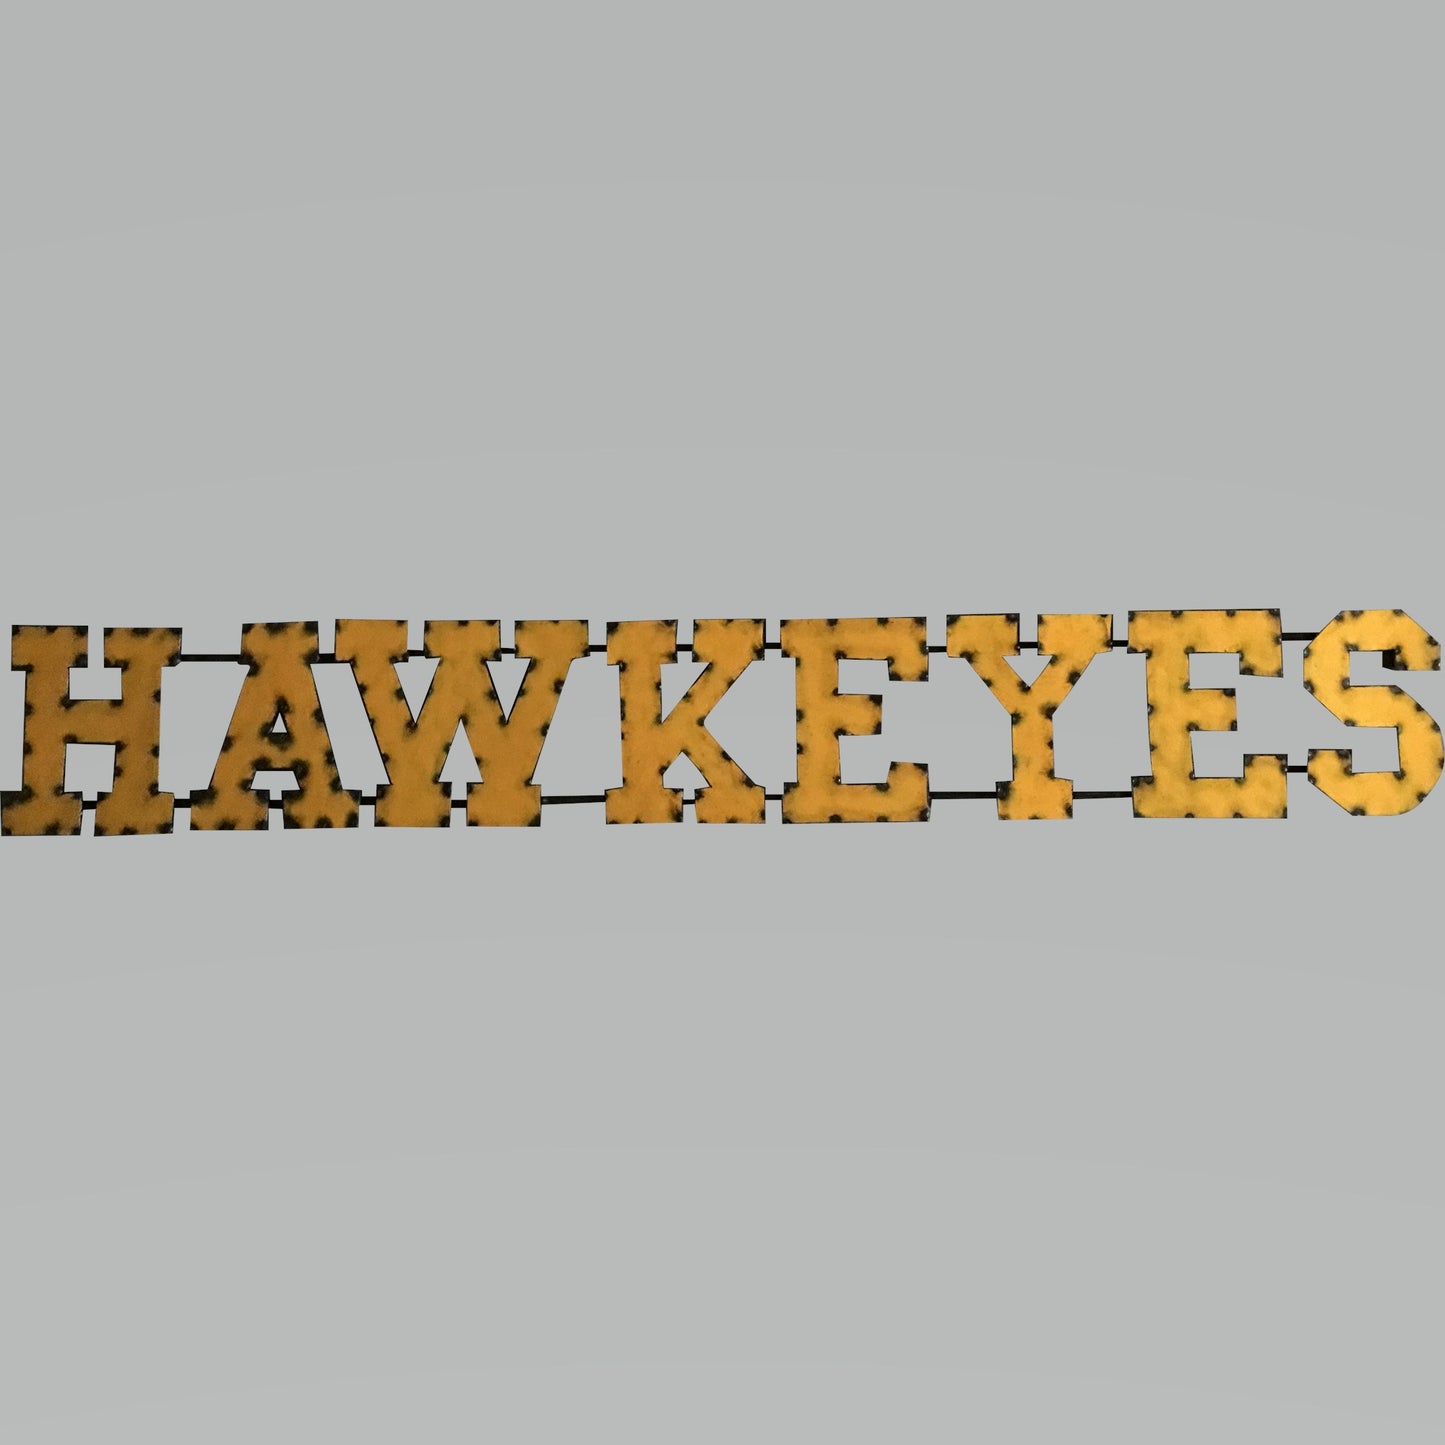 Iowa "Hawkeyes" Recycled Metal Wall Decor